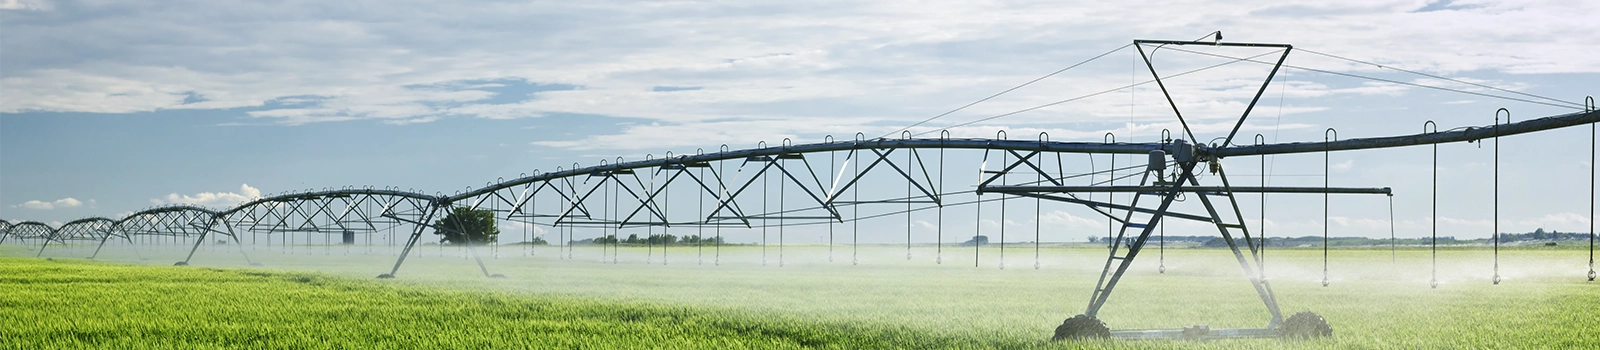 irrigation equipment on farm field